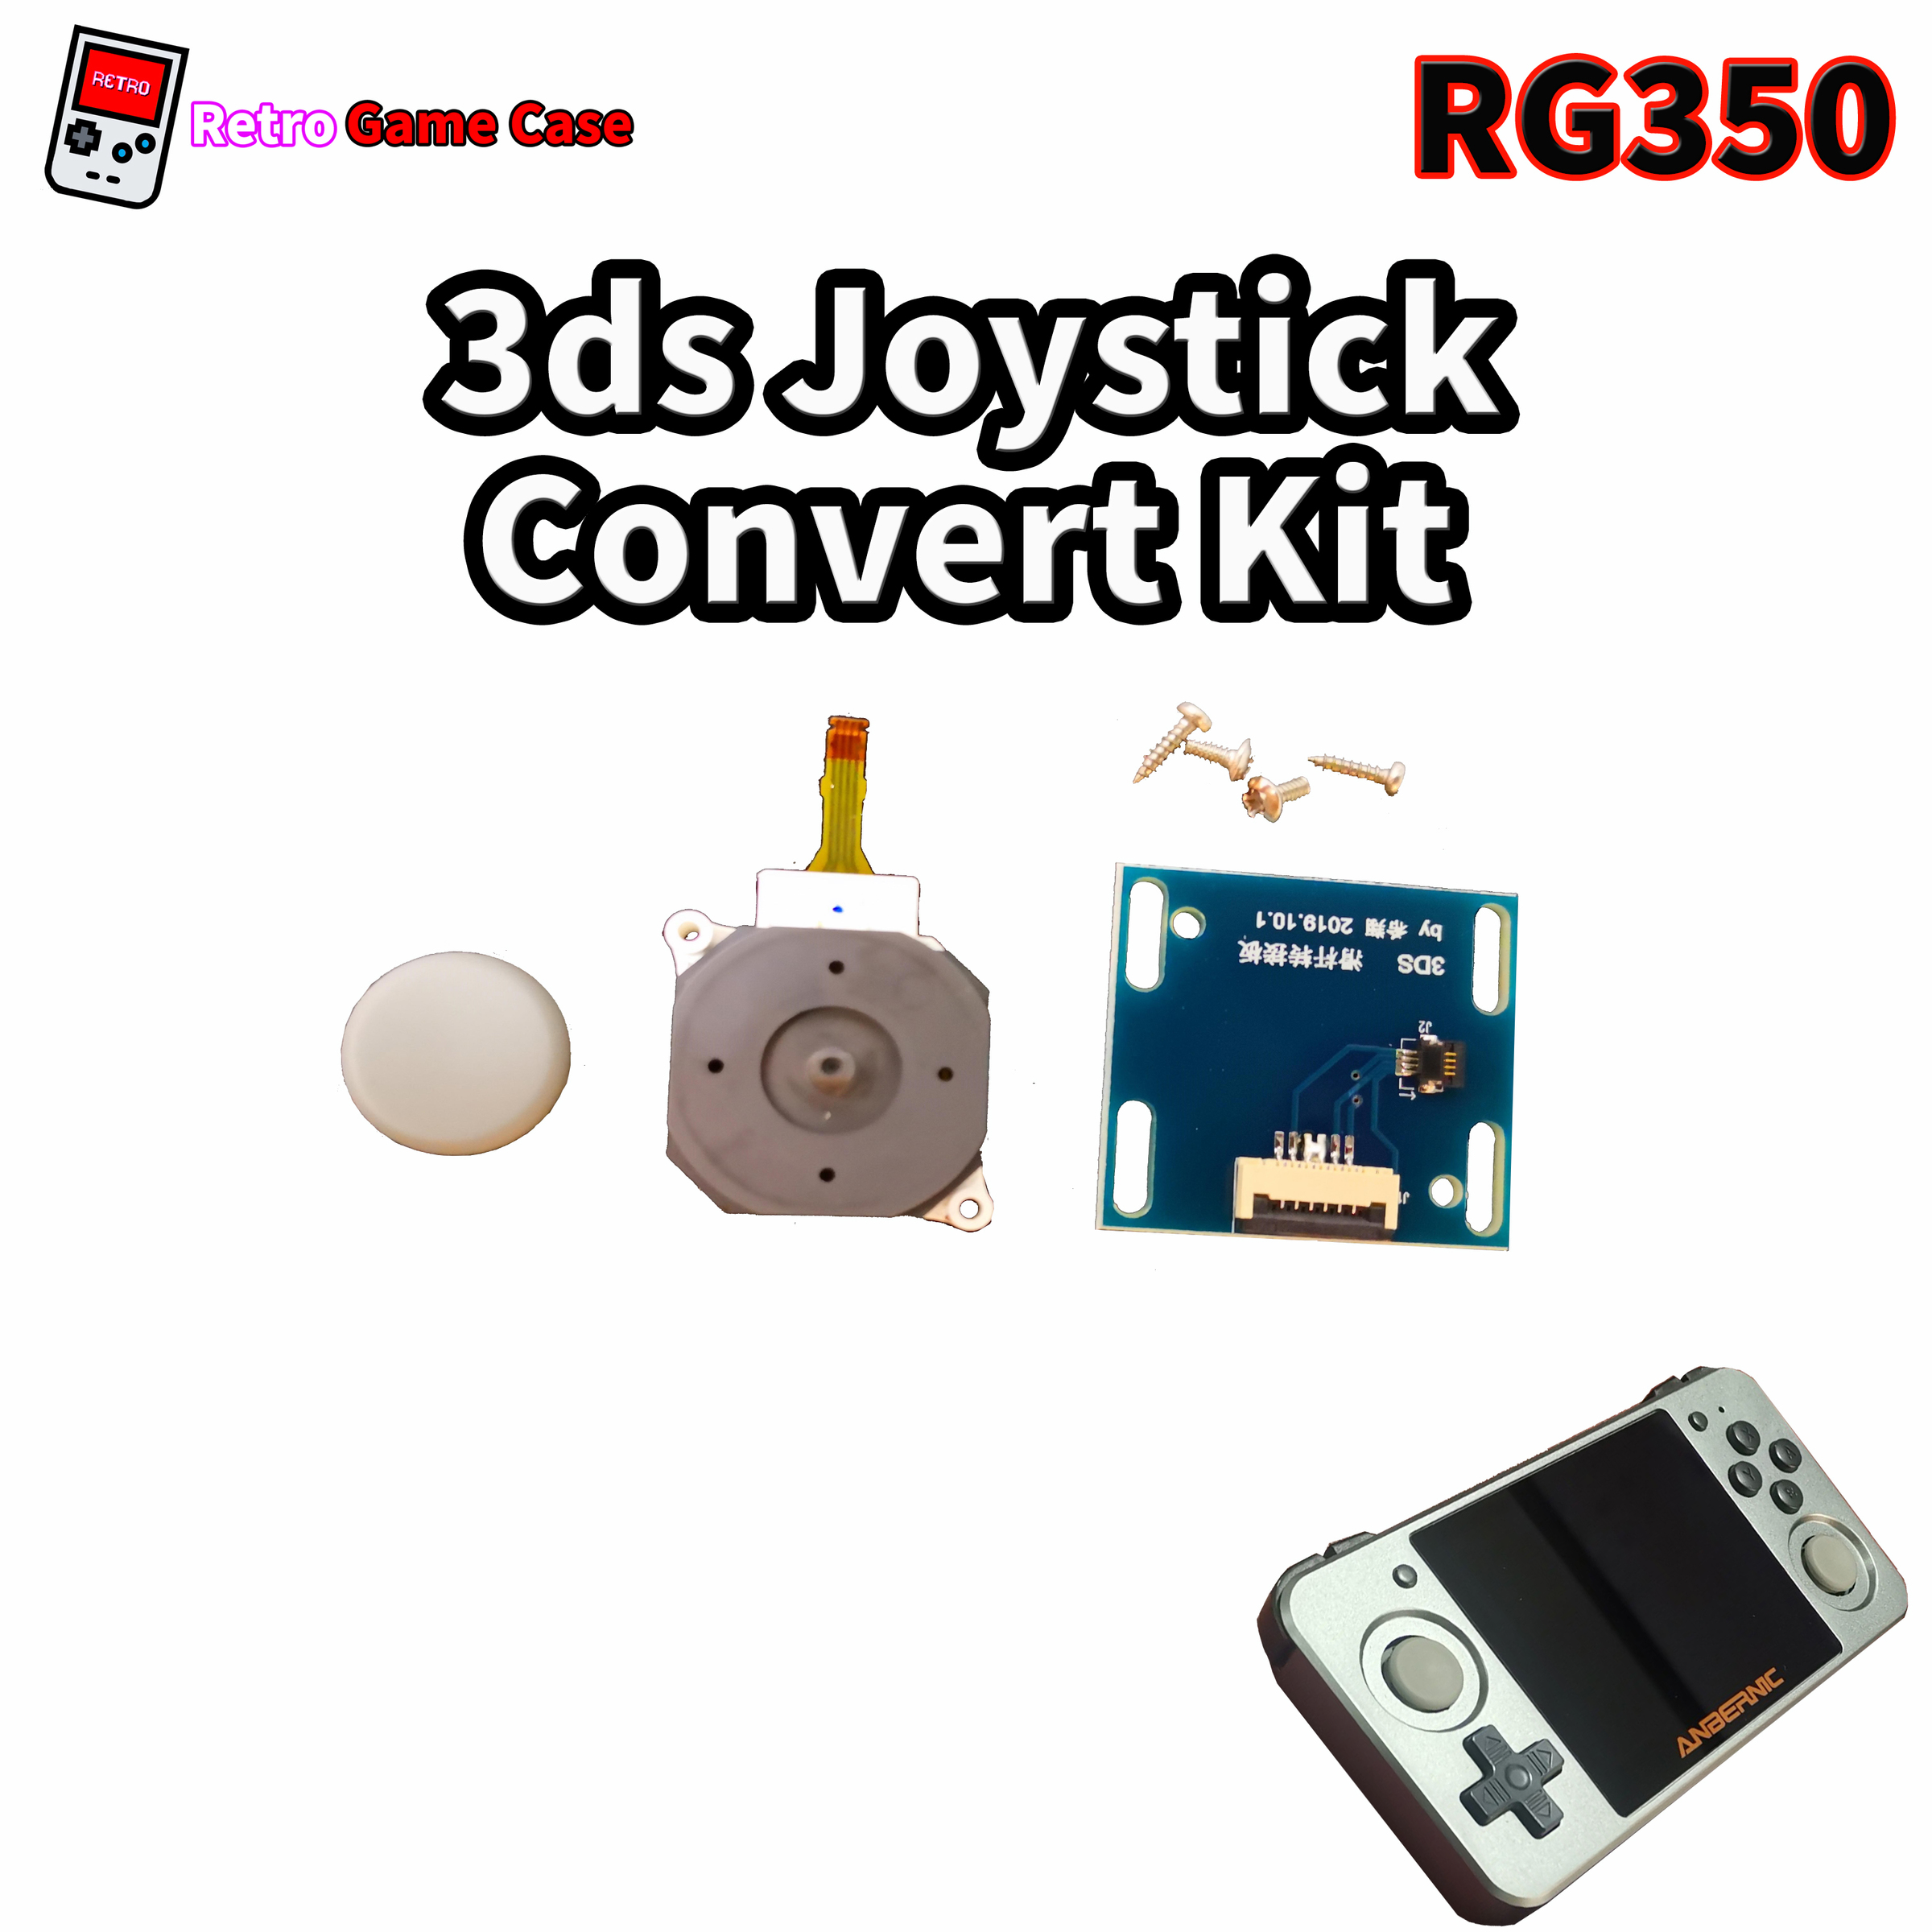 Anbernic RG350 3DS Joystick Convert Kit – My Retro Game Case